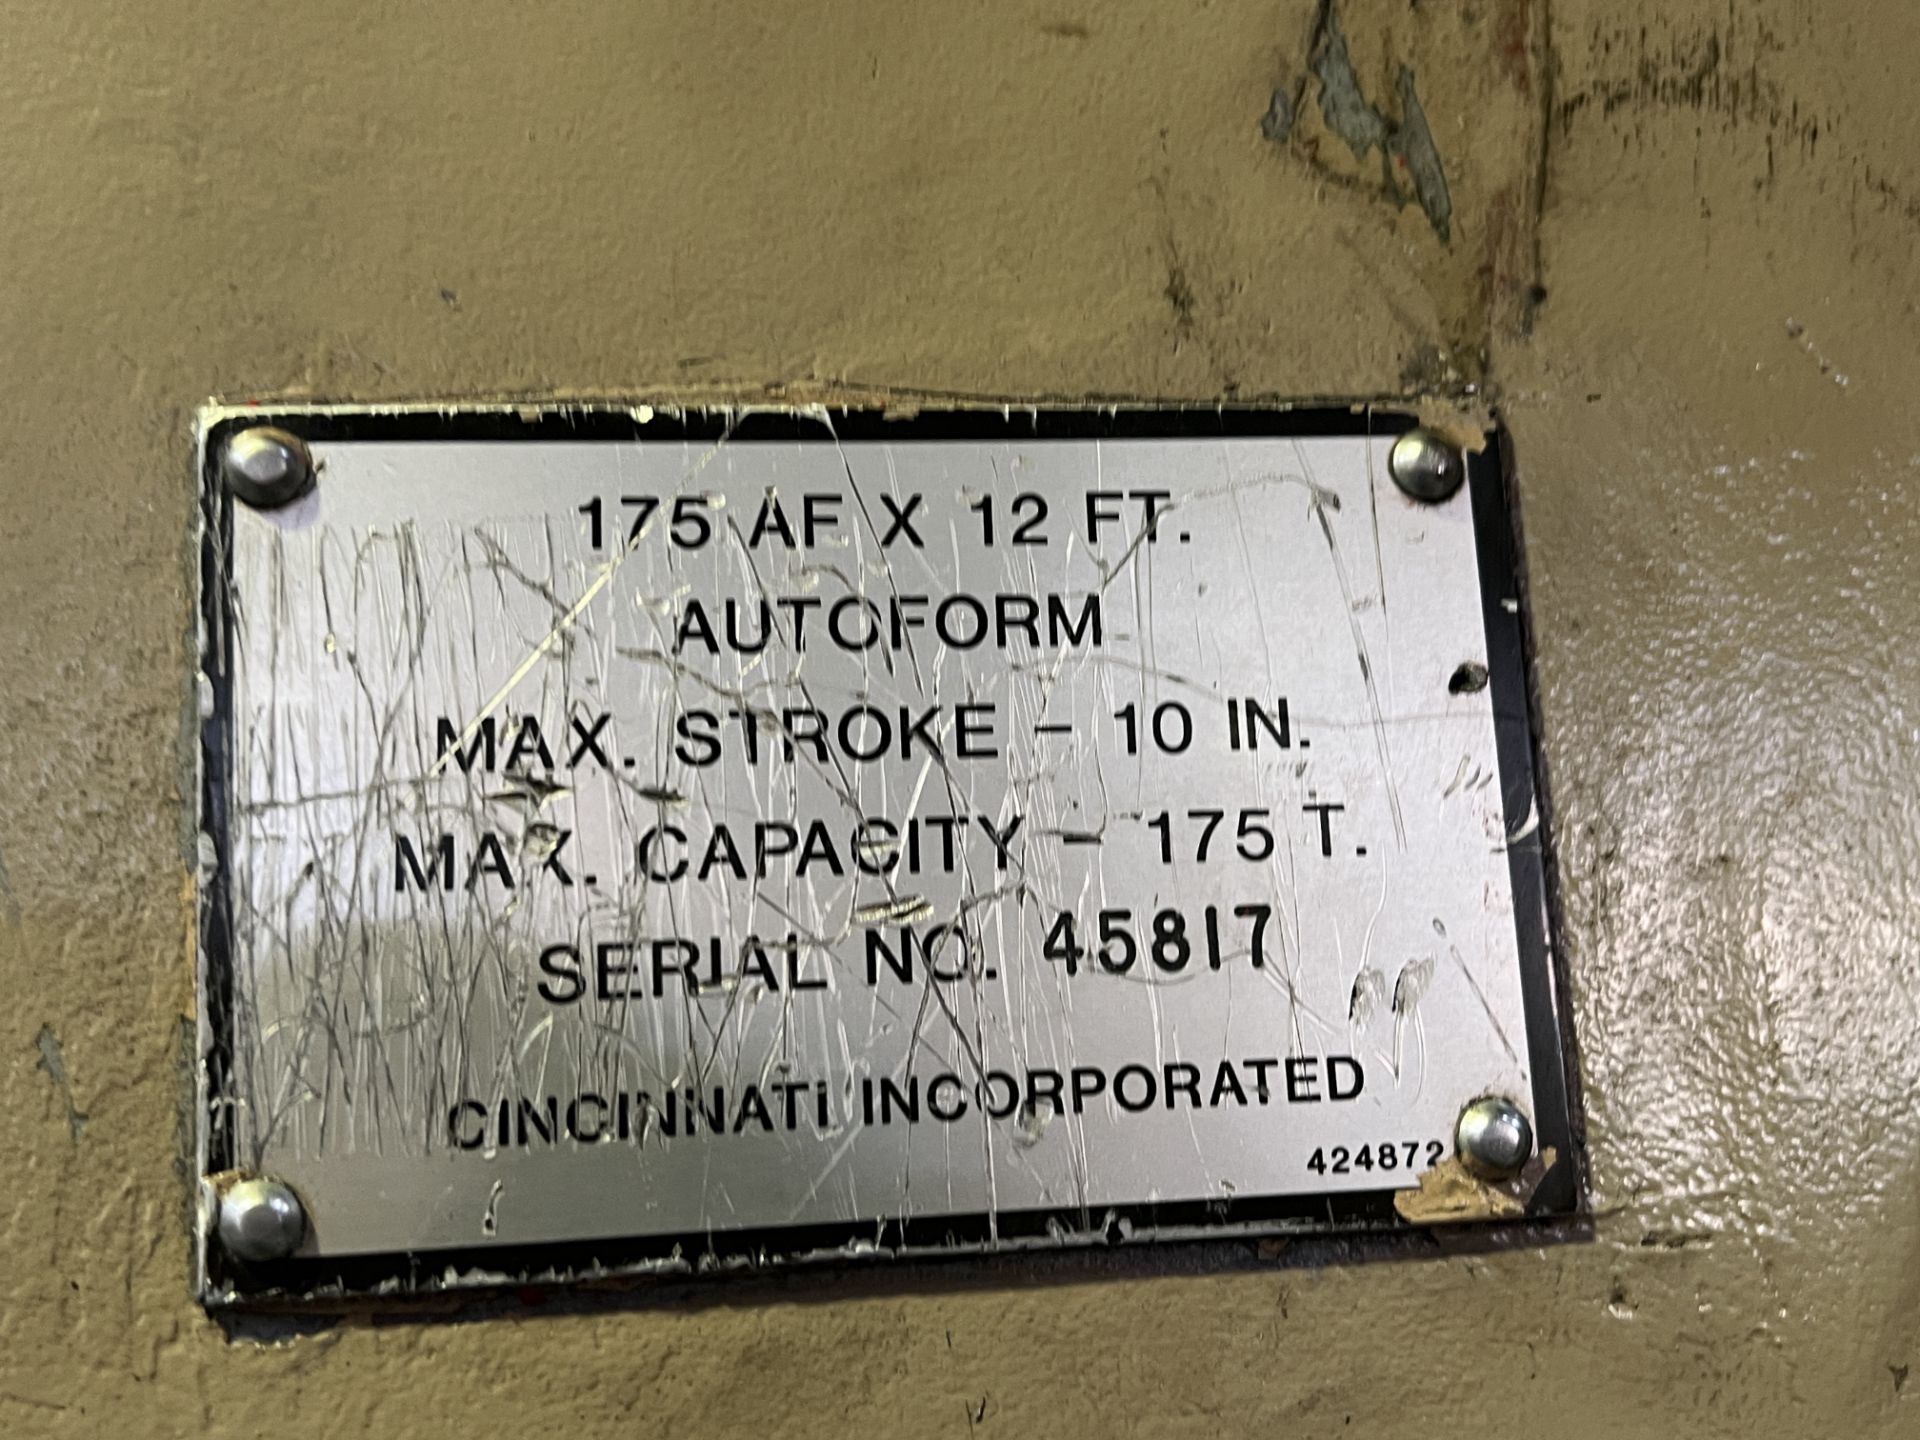 Cincinnati Autoform 175-Ton x 14' 2-Axis Hydraulic CNC Press Brake, Model 175AFx12FT, S/N 45817 - Image 21 of 21